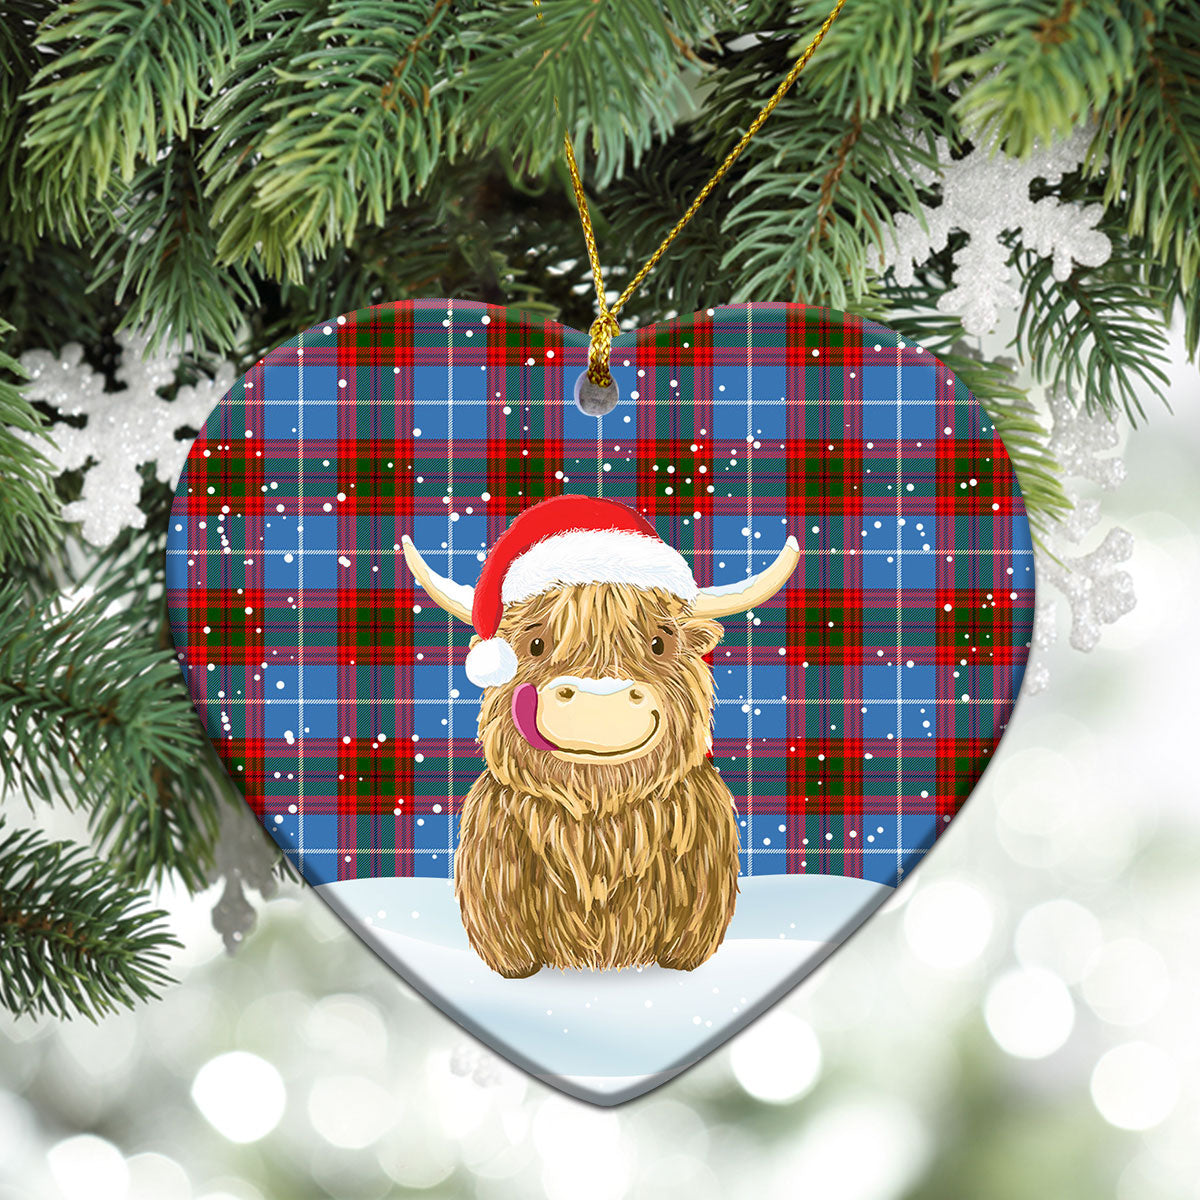 Pentland Tartan Christmas Ceramic Ornament - Highland Cows Style